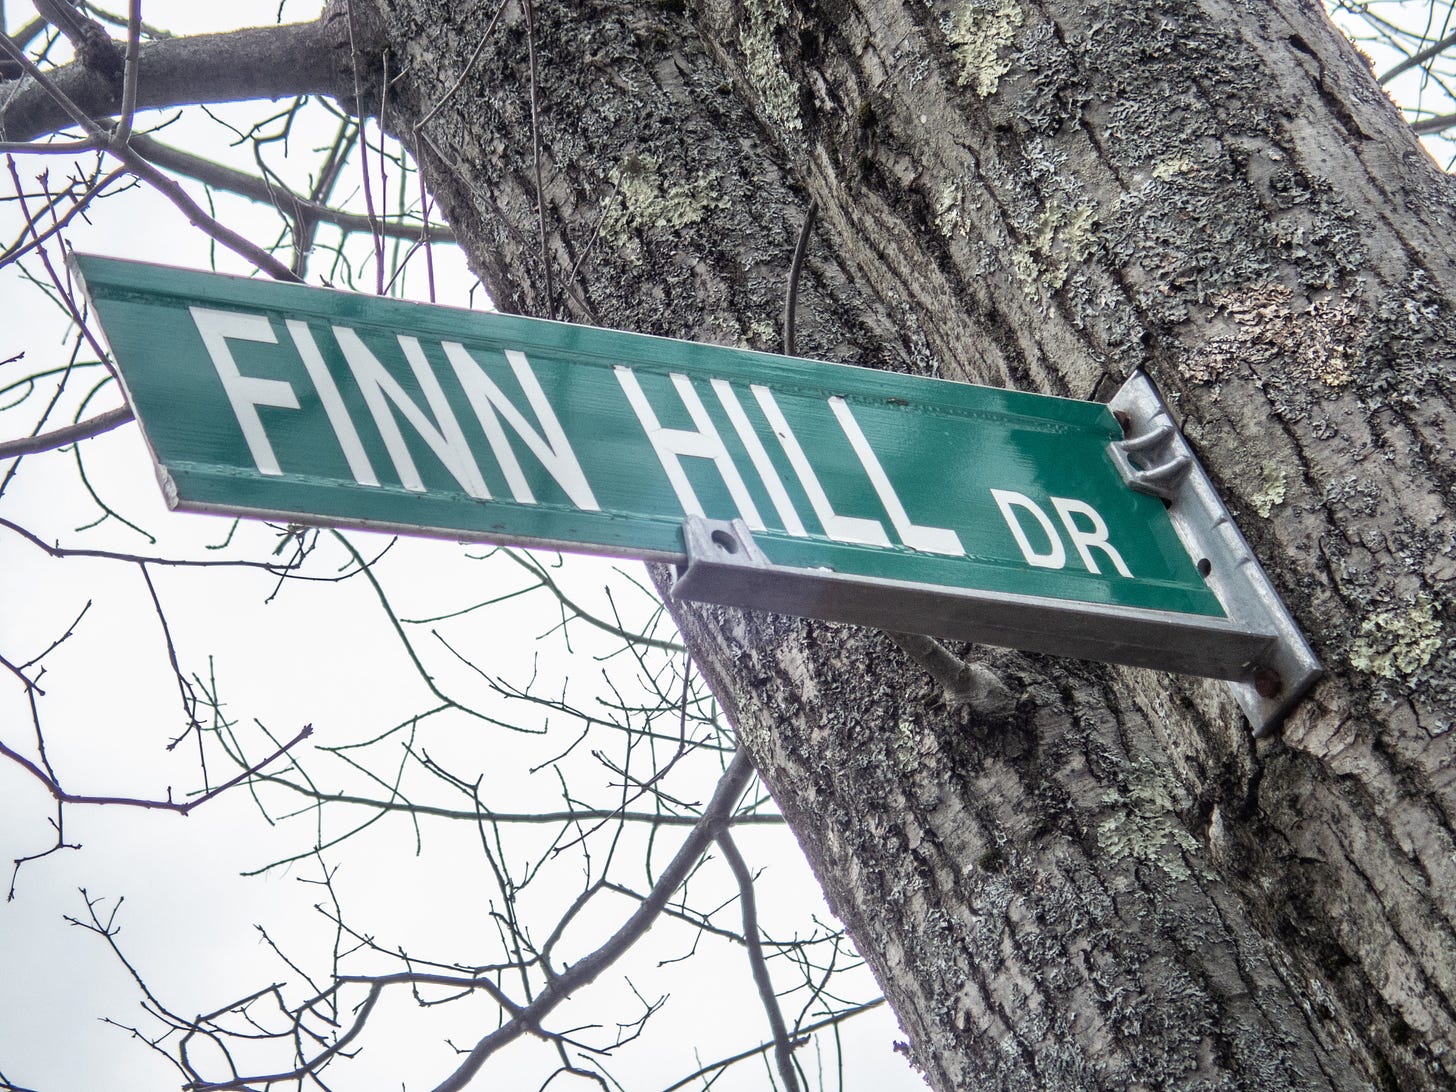 Finn Hill Drive sign